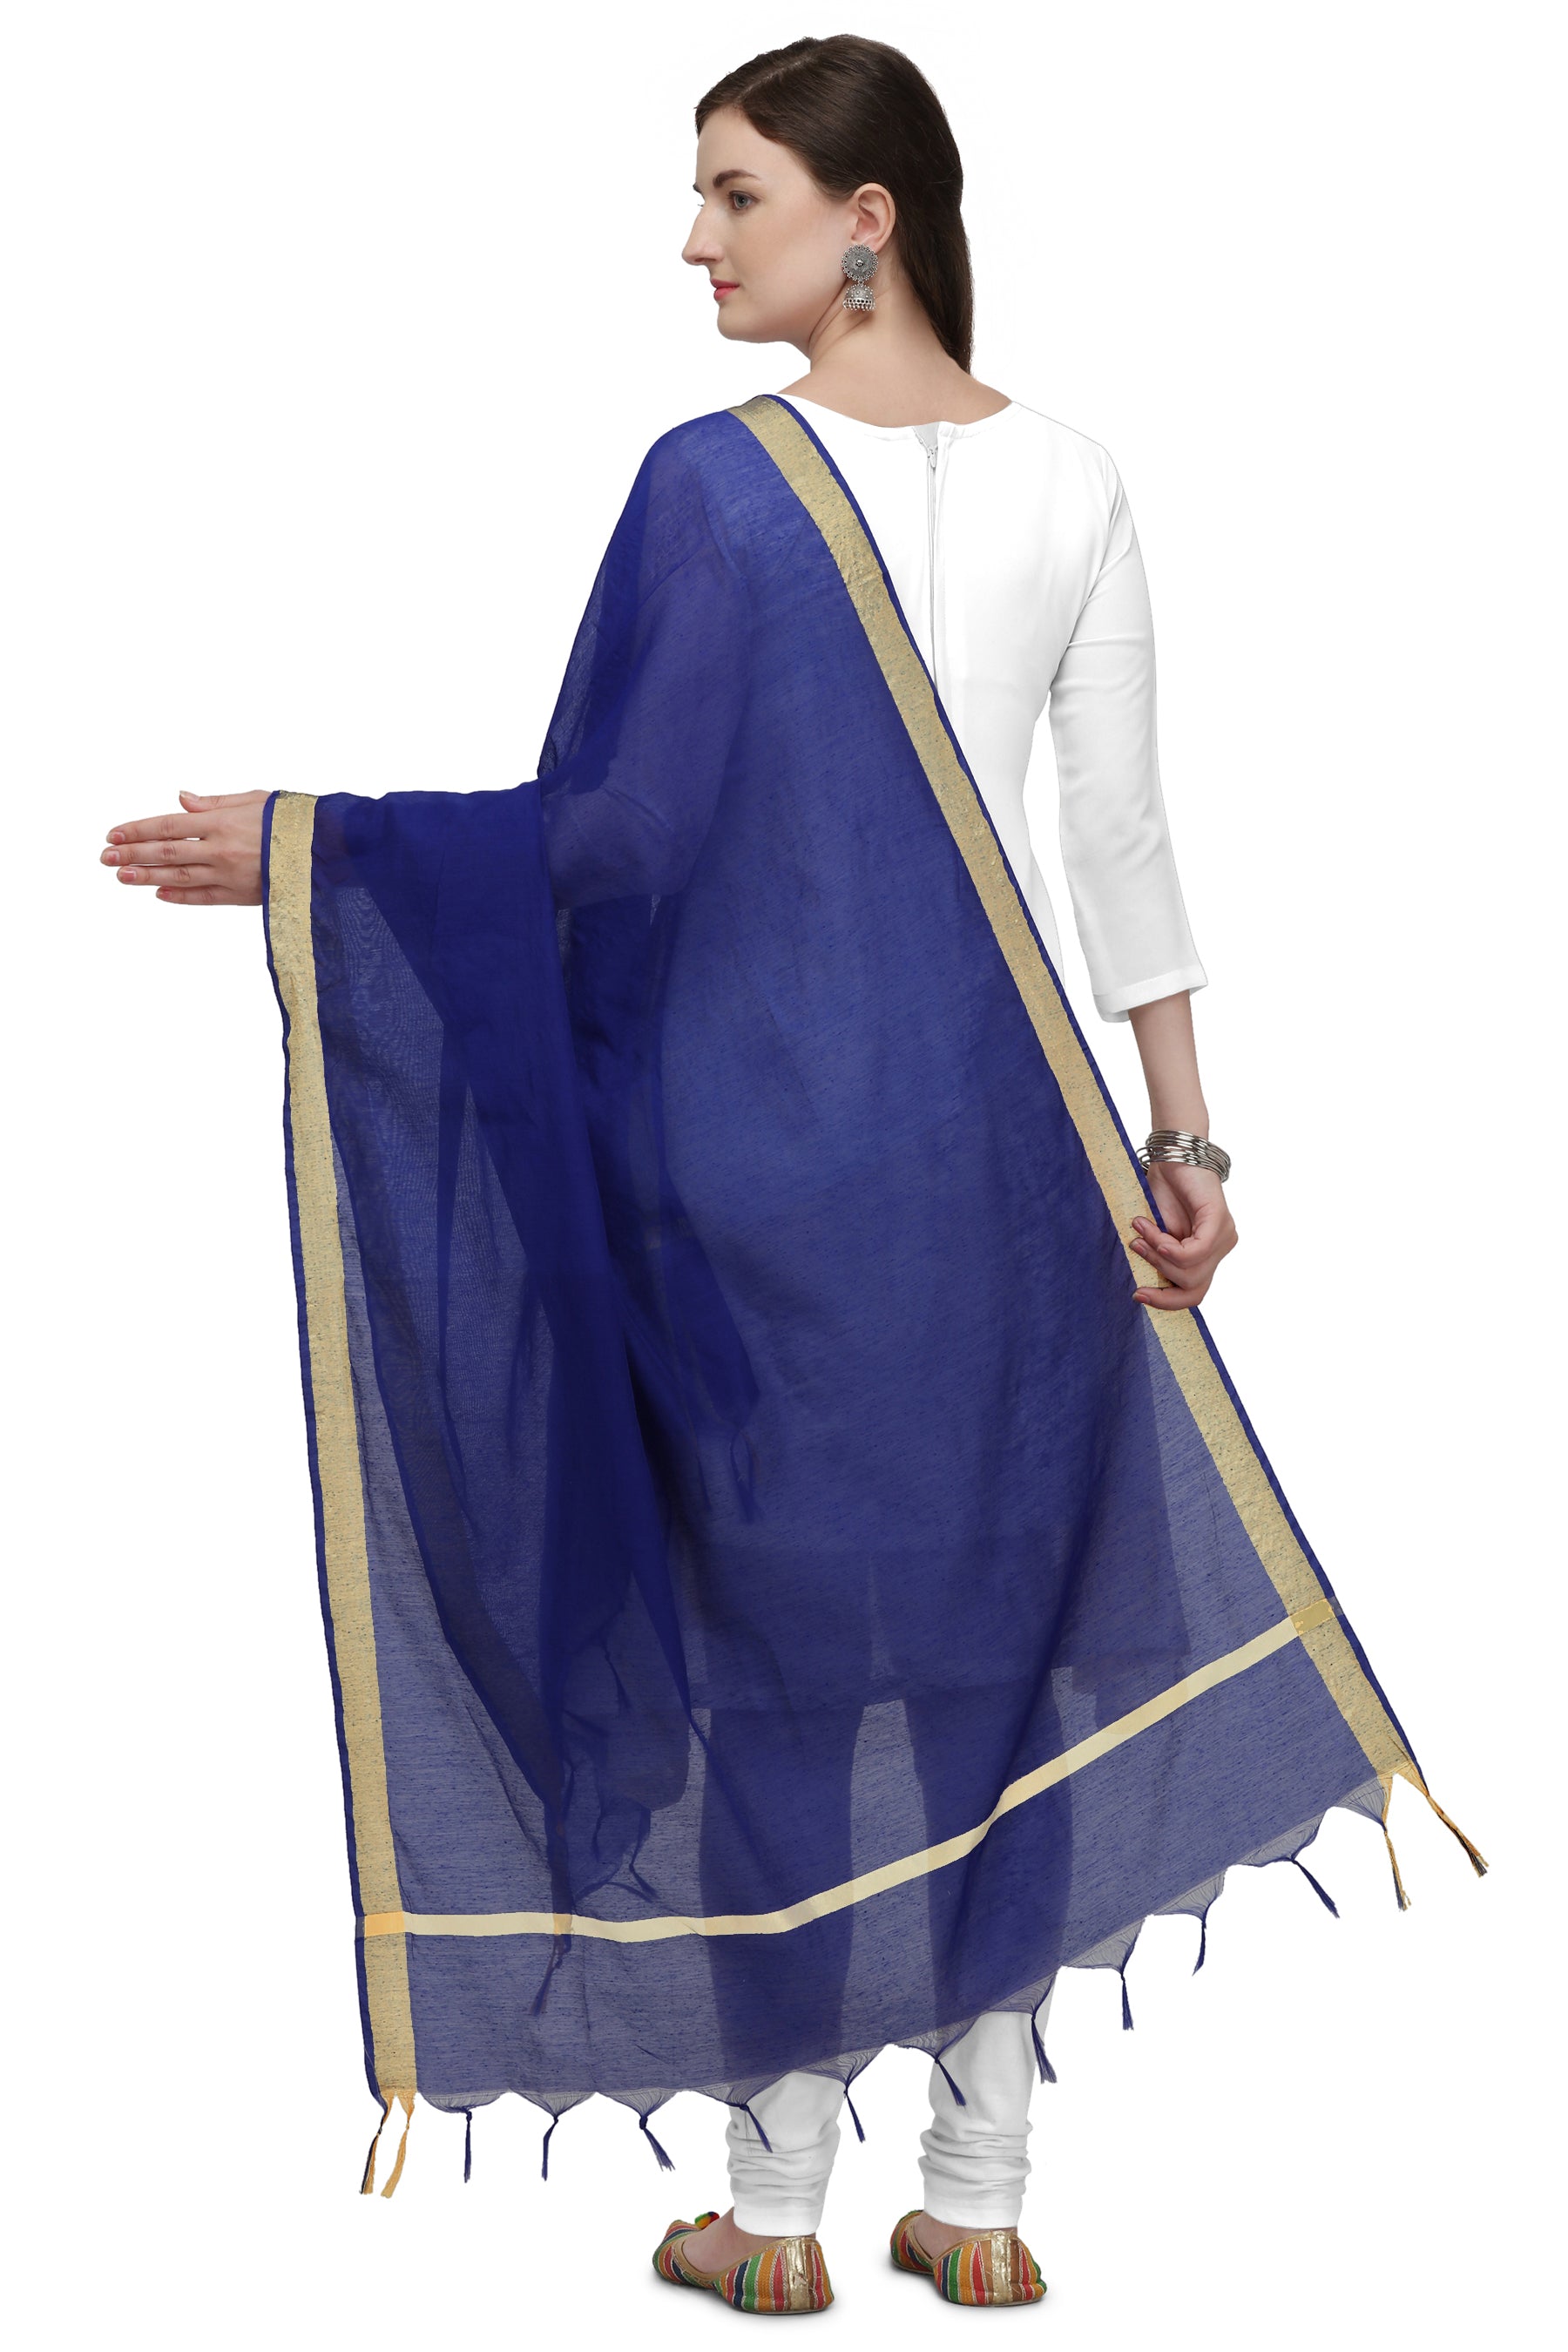 Women's Royal Blue Solid Self Woven Gold Zari Border Cotton Silk Dupatta With Tassles - NIMIDHYA